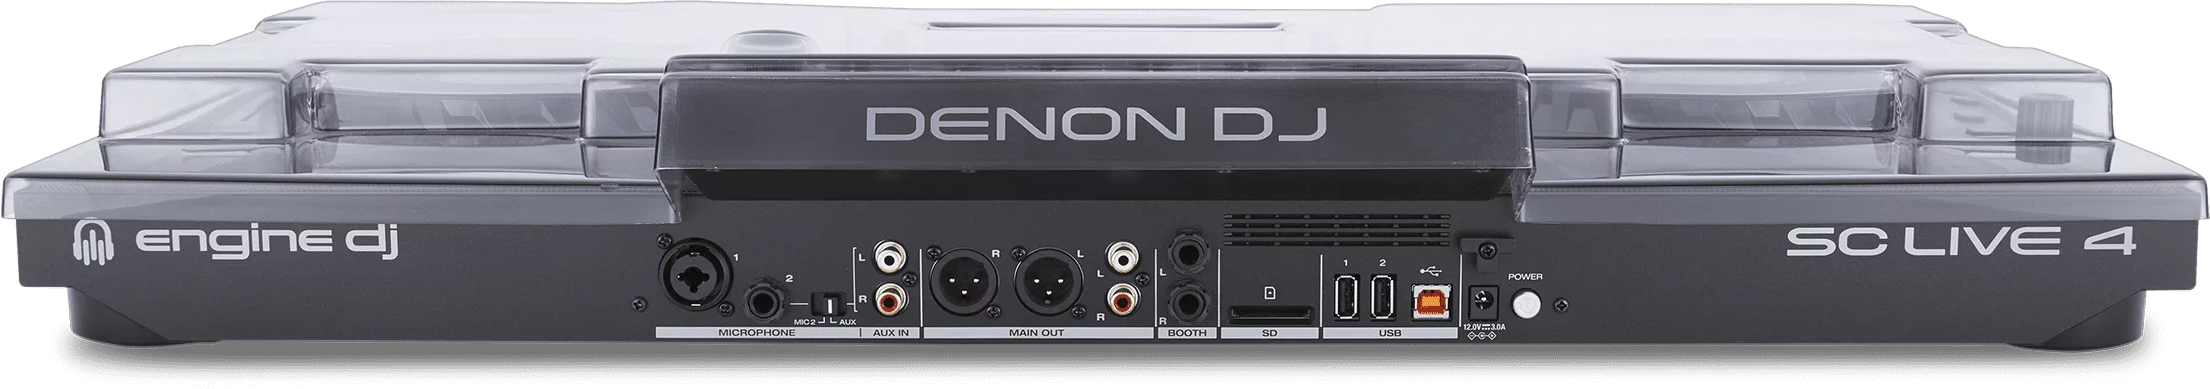 Decksaver Denon Dj Sc Live 4 Cover - DJ hoes - Variation 2